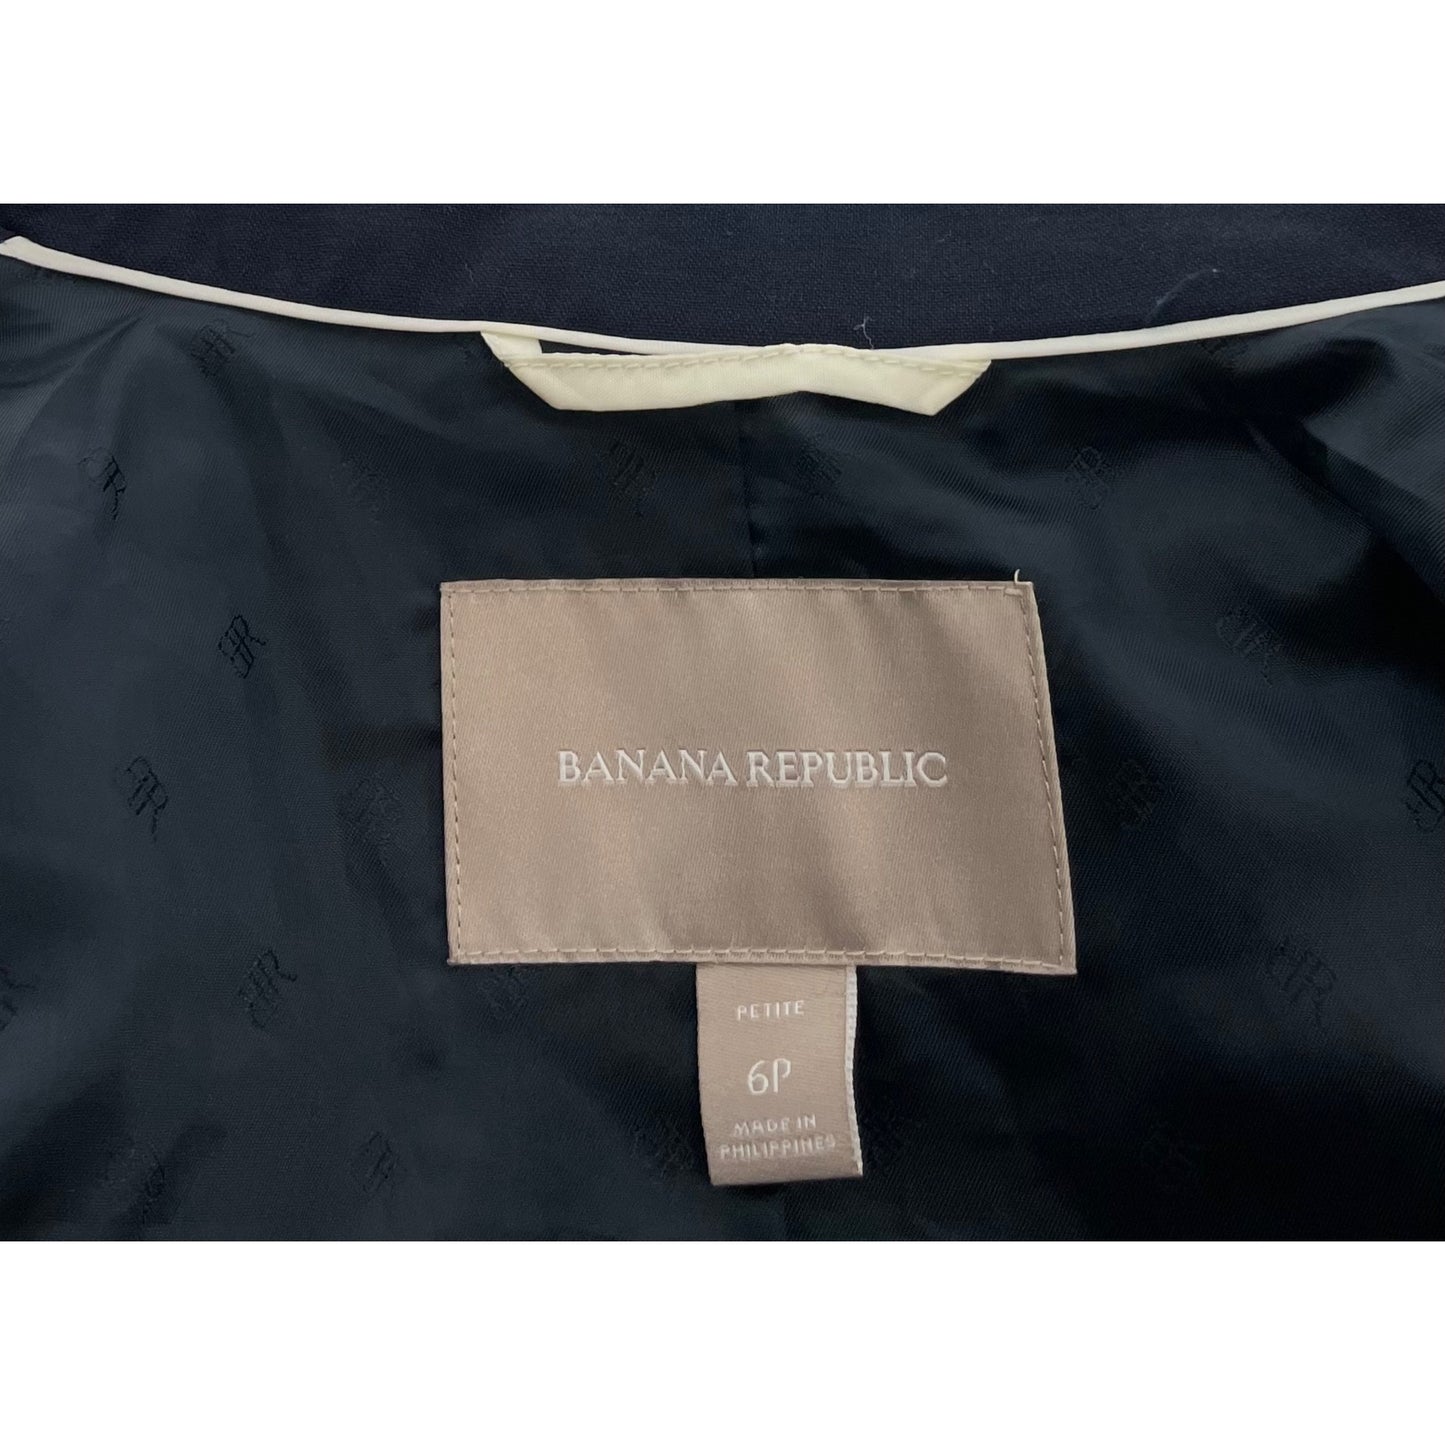 Banana Republic Women's Size 6P Navy Business Suit Blazer